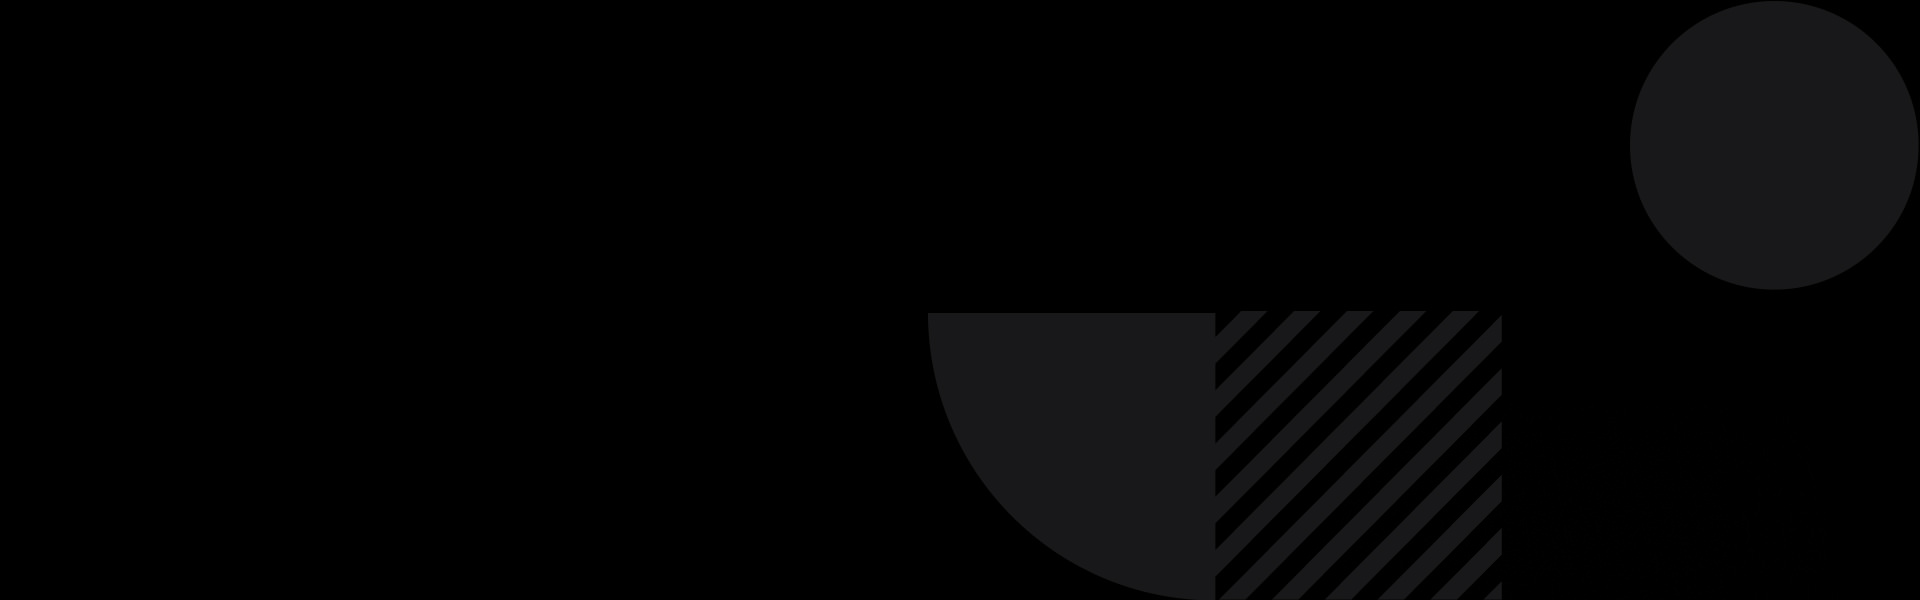 Background image of geometric shapes on a black background